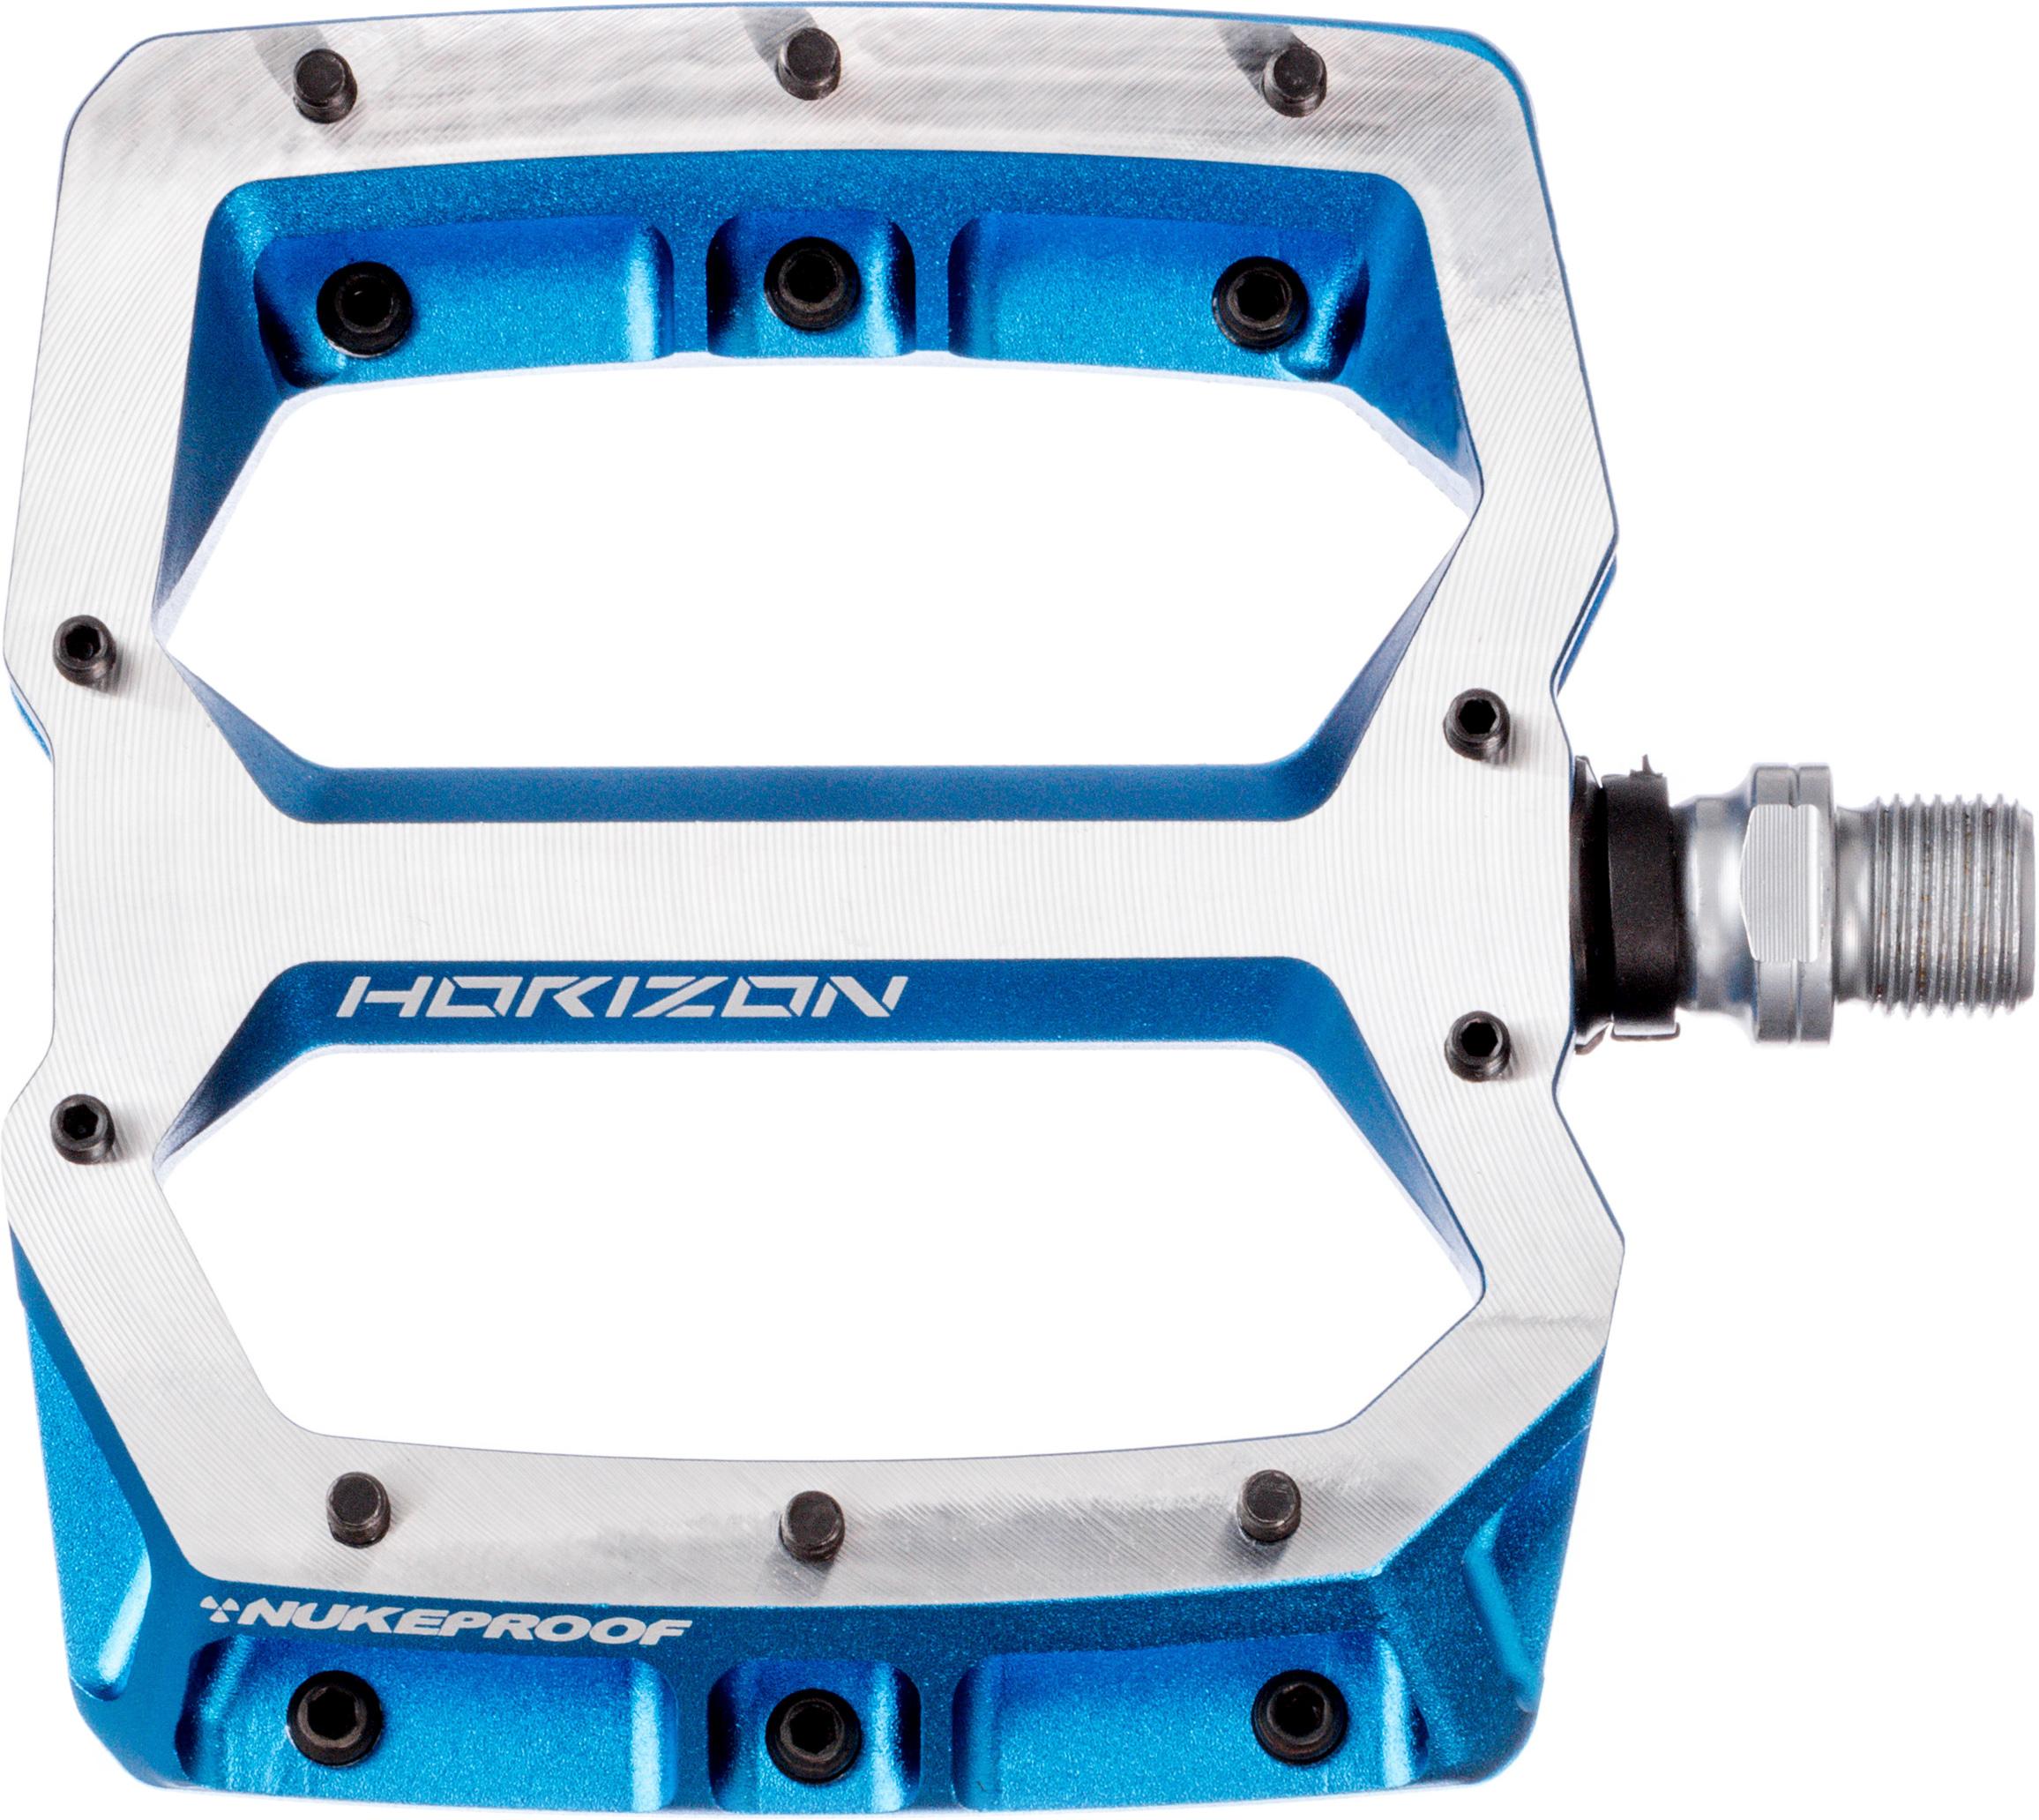 Nukeproof Horizon Pro Downhill Flat Pedals - Blue